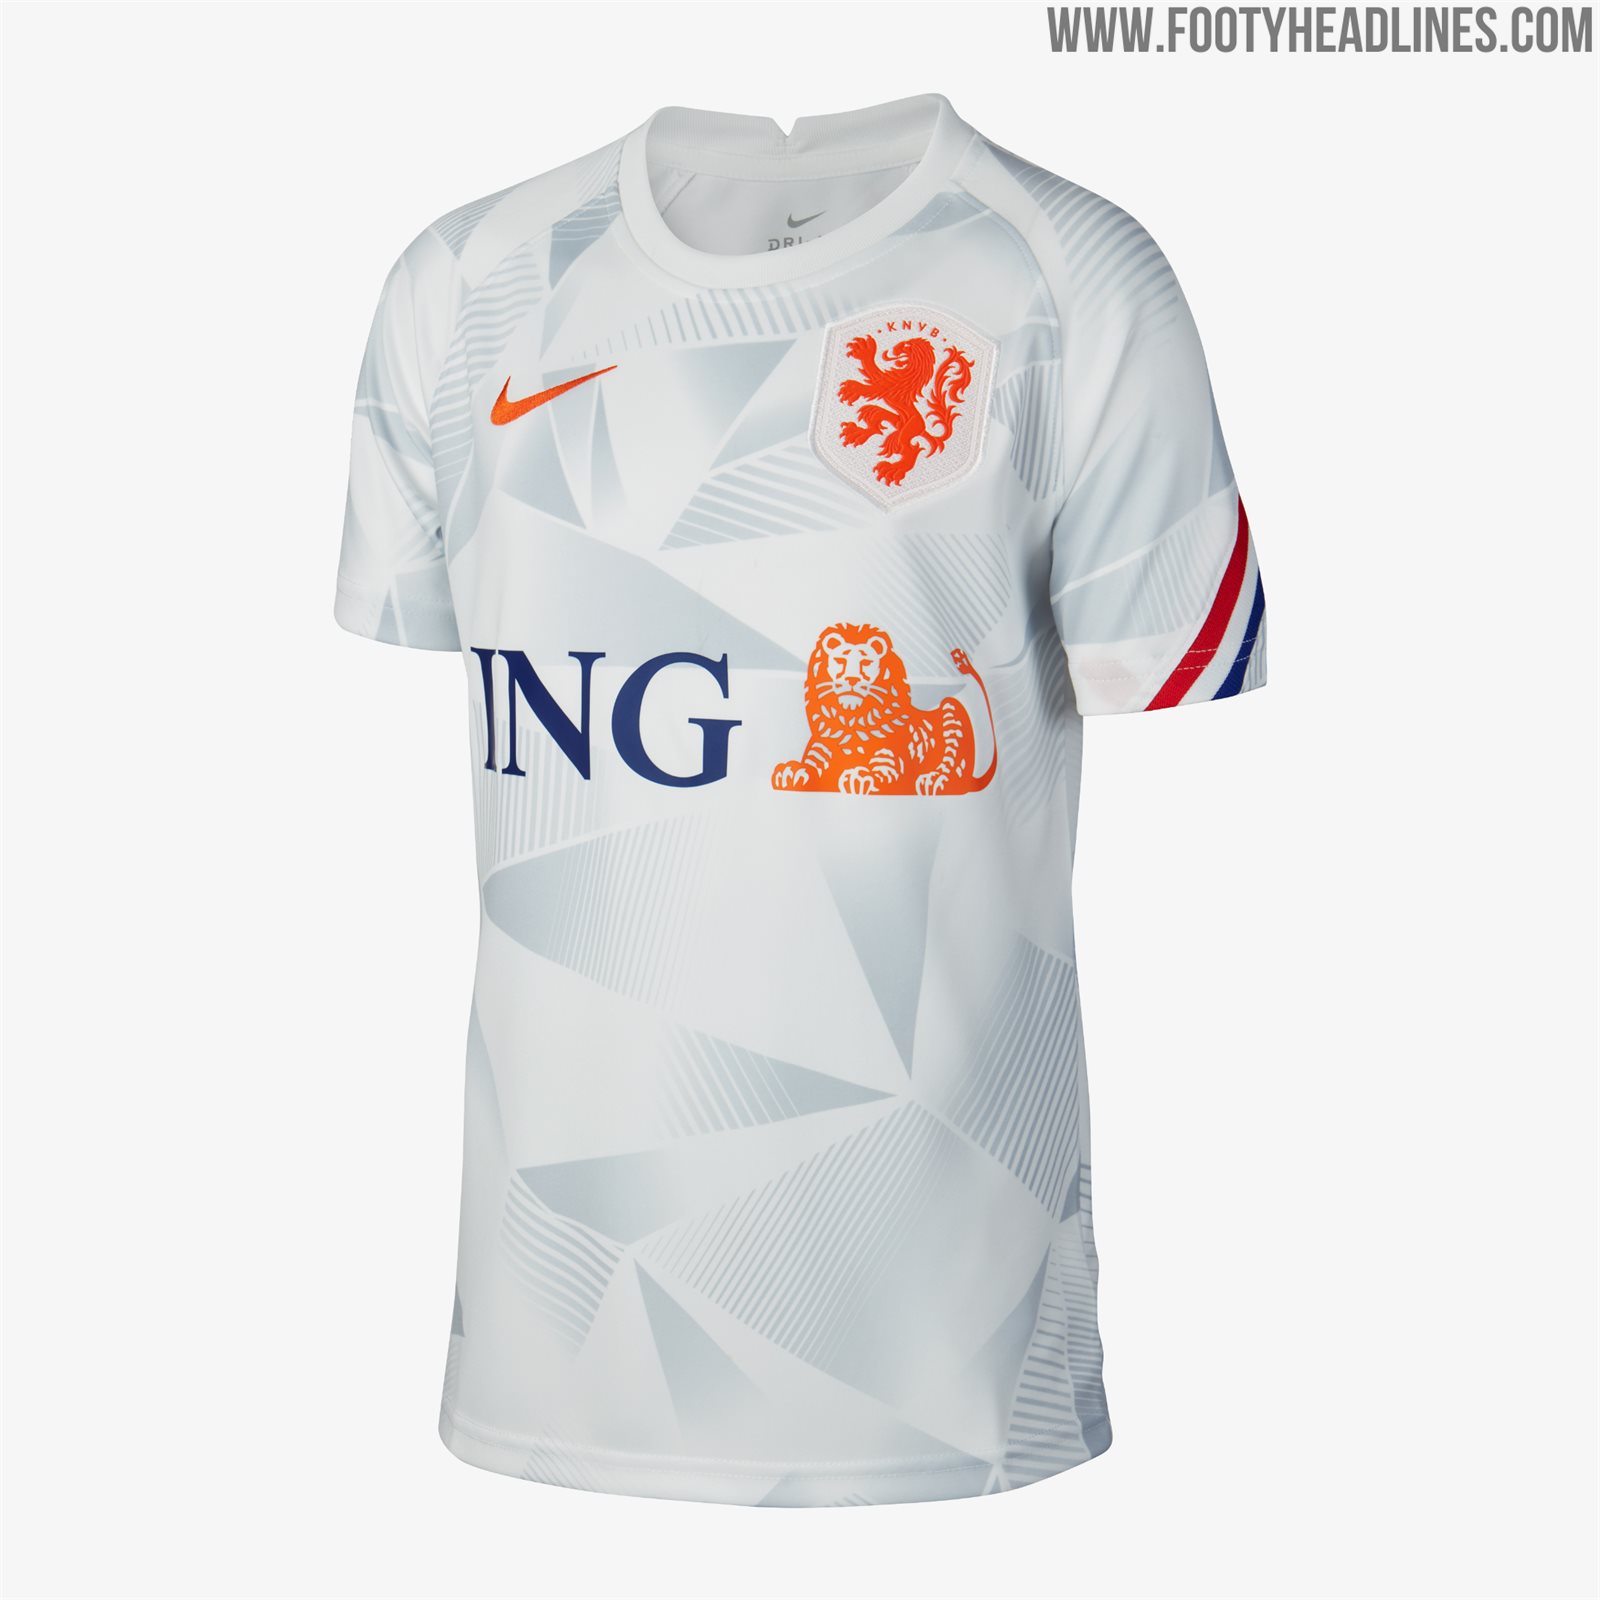 Netherlands EURO 2020 Pre-Match Shirt Leaked - Footy Headlines